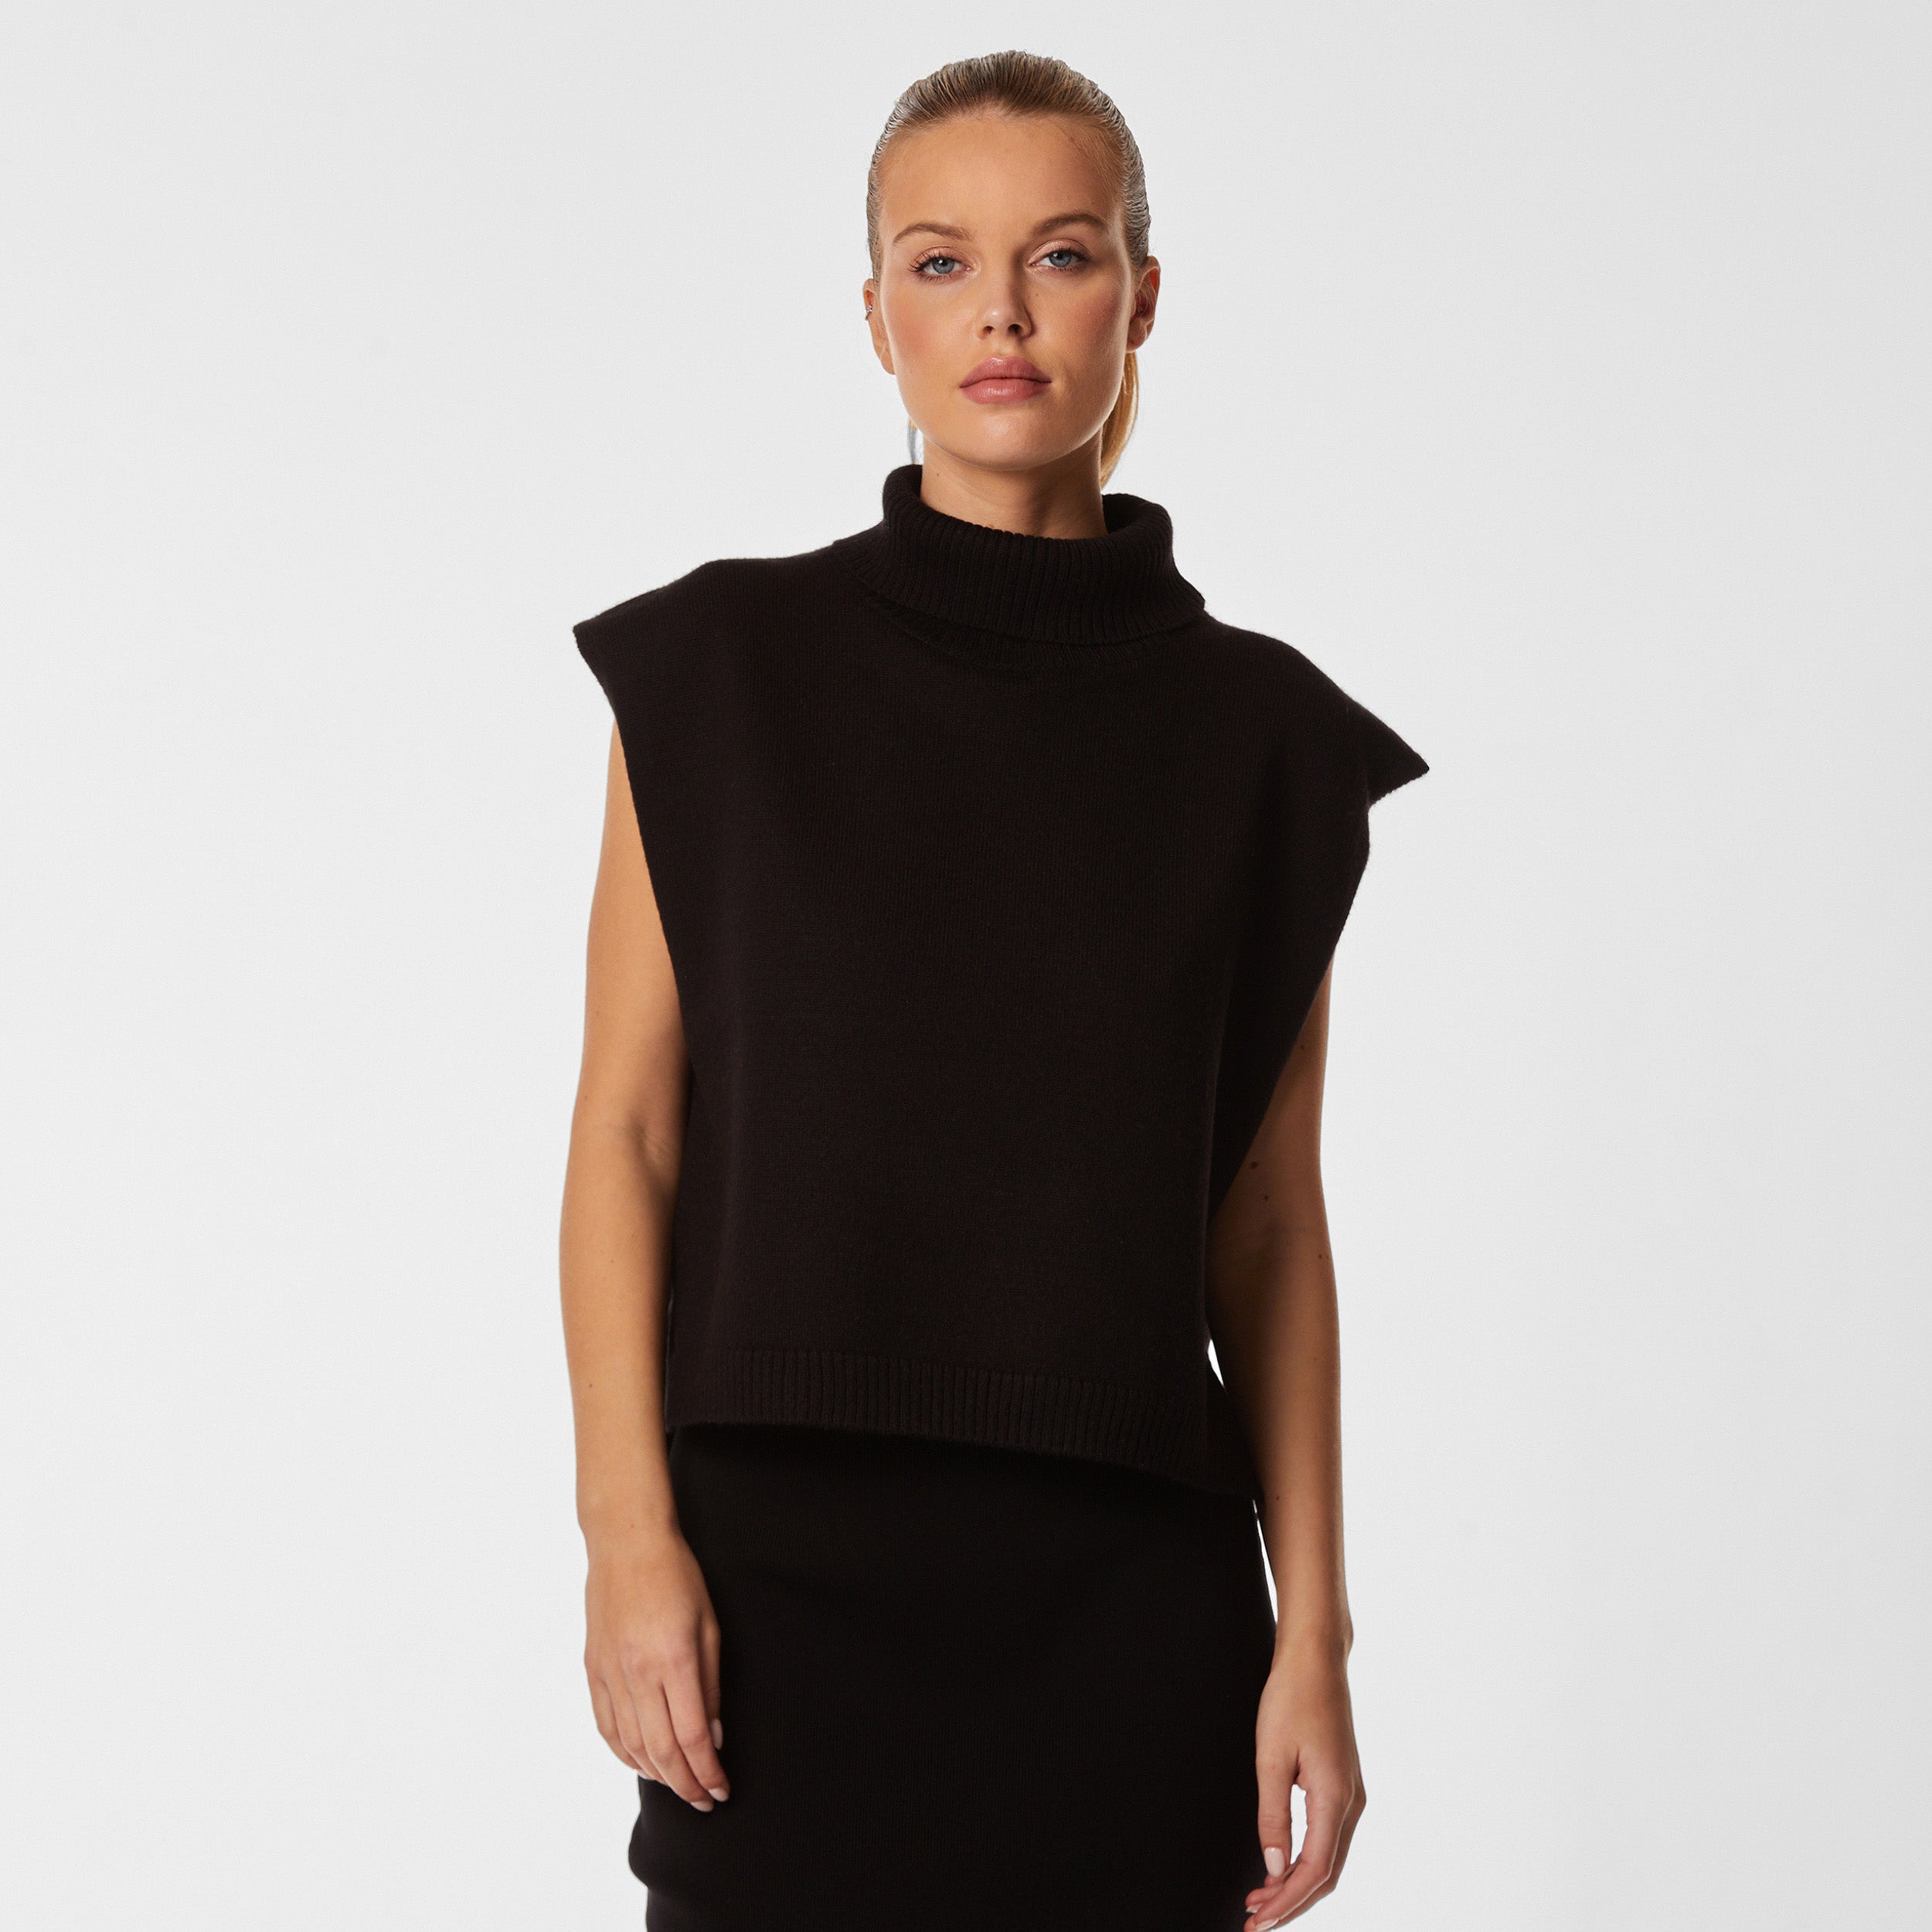 Woman wearing black sleeveless sweater